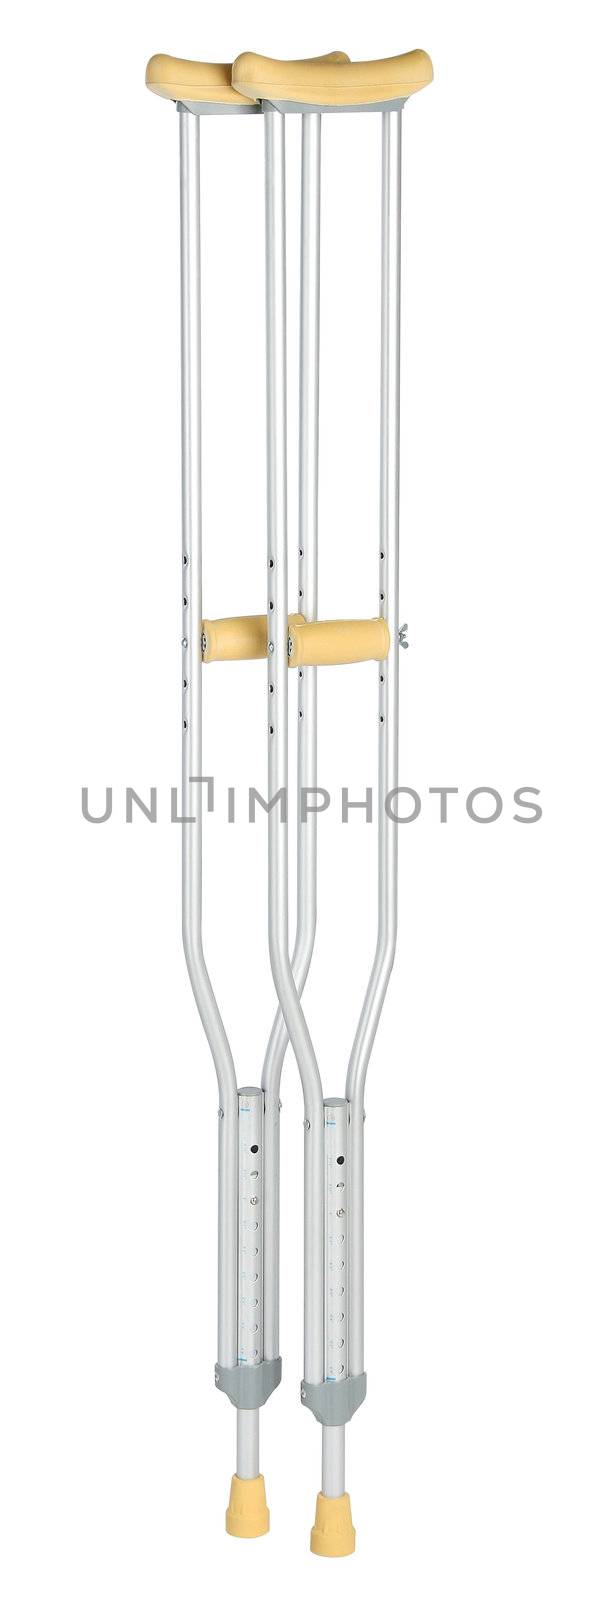 Pair of crutches, orthopedic equipment over white